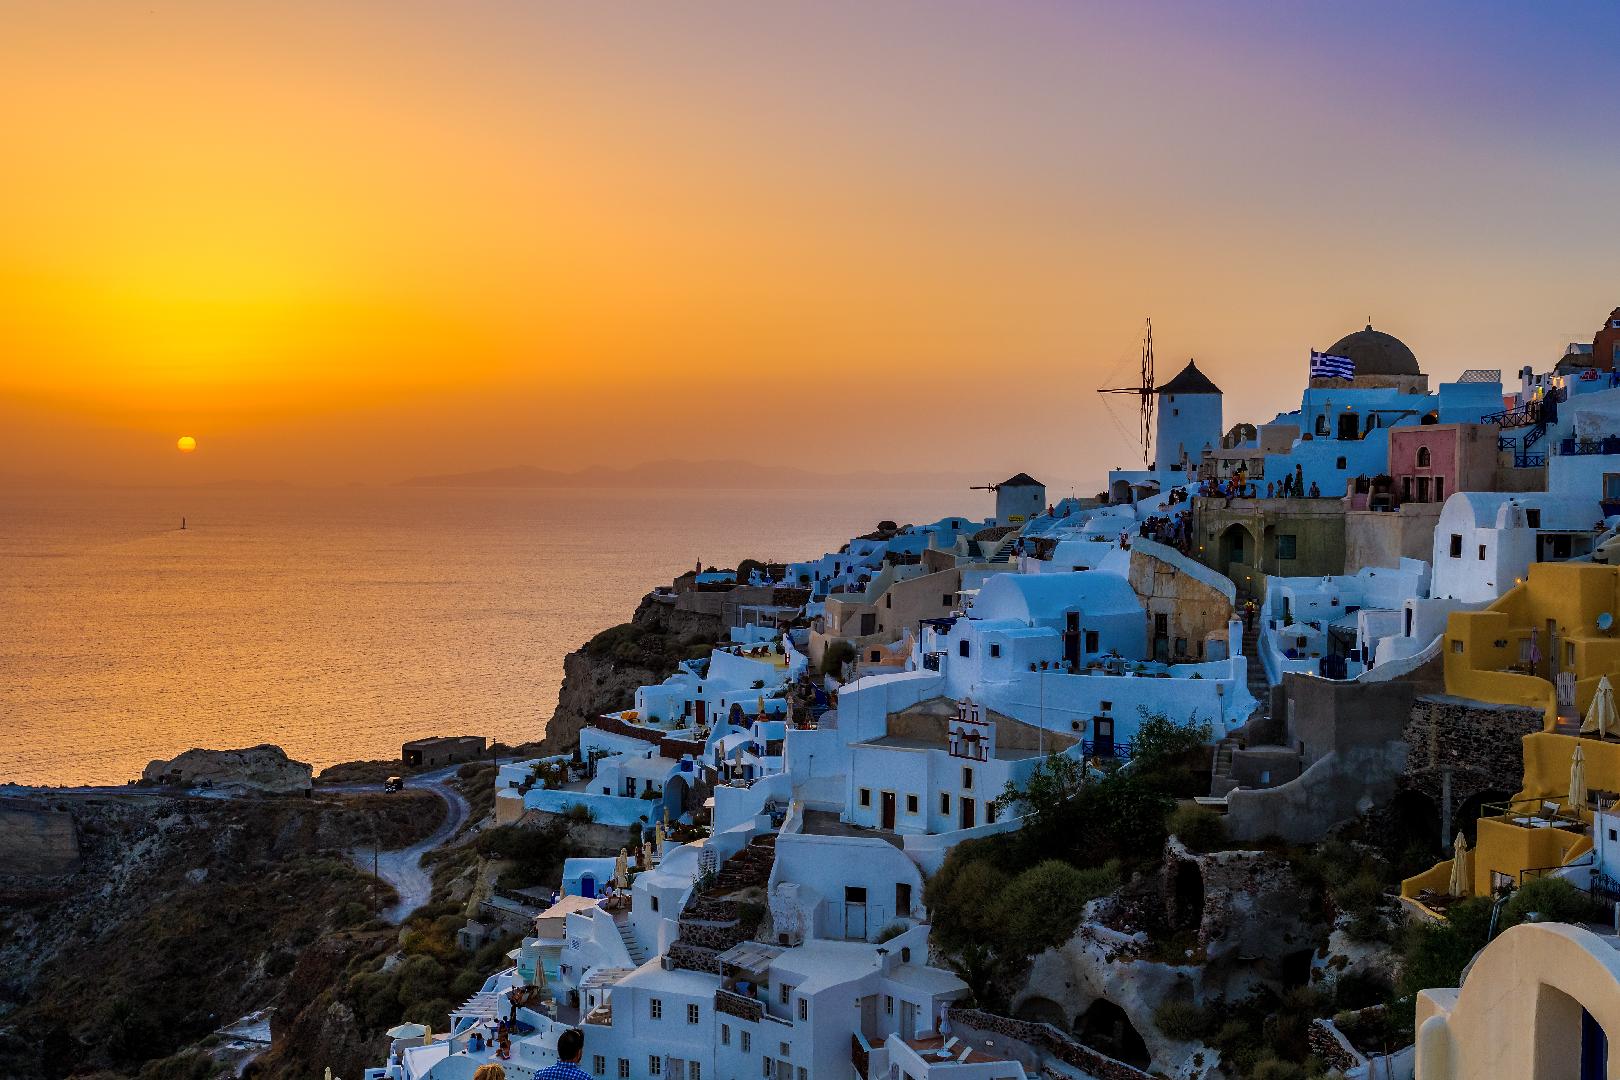 More information about "Καινοτόμες ιδέες για τον ελληνικό τουρισμό"